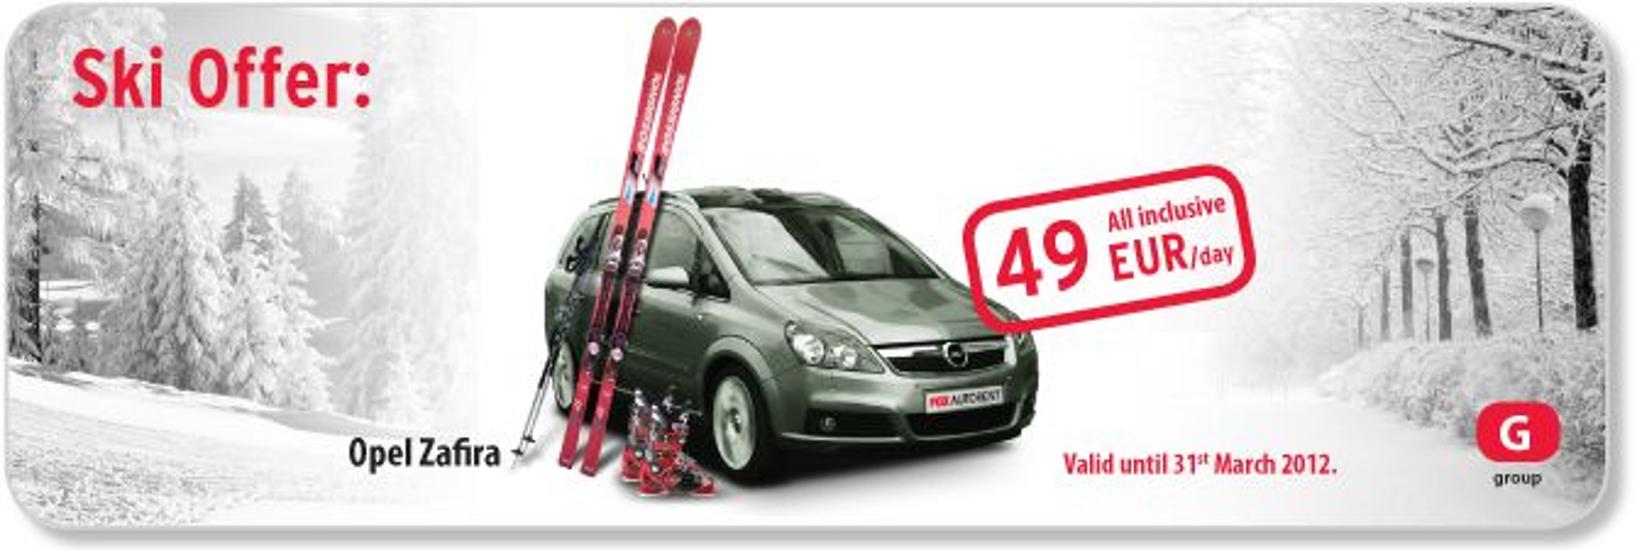 Fox Autorent Ski Offer: Opel Zafira For 49 EUR/Day